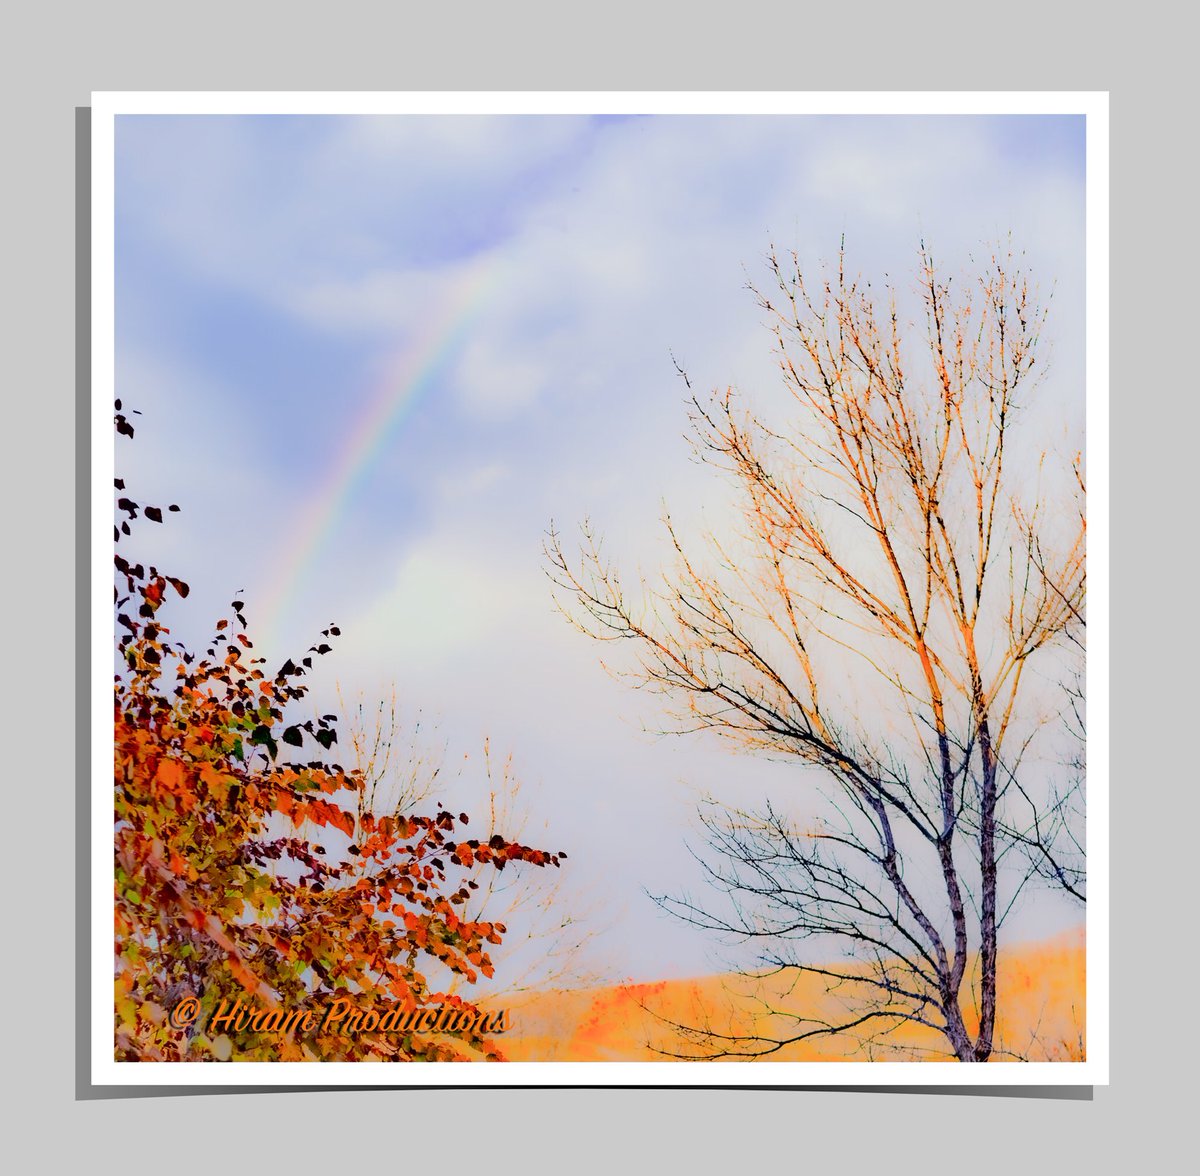 'Rainbow in a tree'

#nikon #nikonphotography #nikonphotographer #rainbows #rainbow #adobephotoshop #adobelightroom #camera #cameras #photographybusiness #photoshopediting #editingskills #editingmagic #film #advertisingphotography #idaho #idaholiving #art #ideas #filmstudio